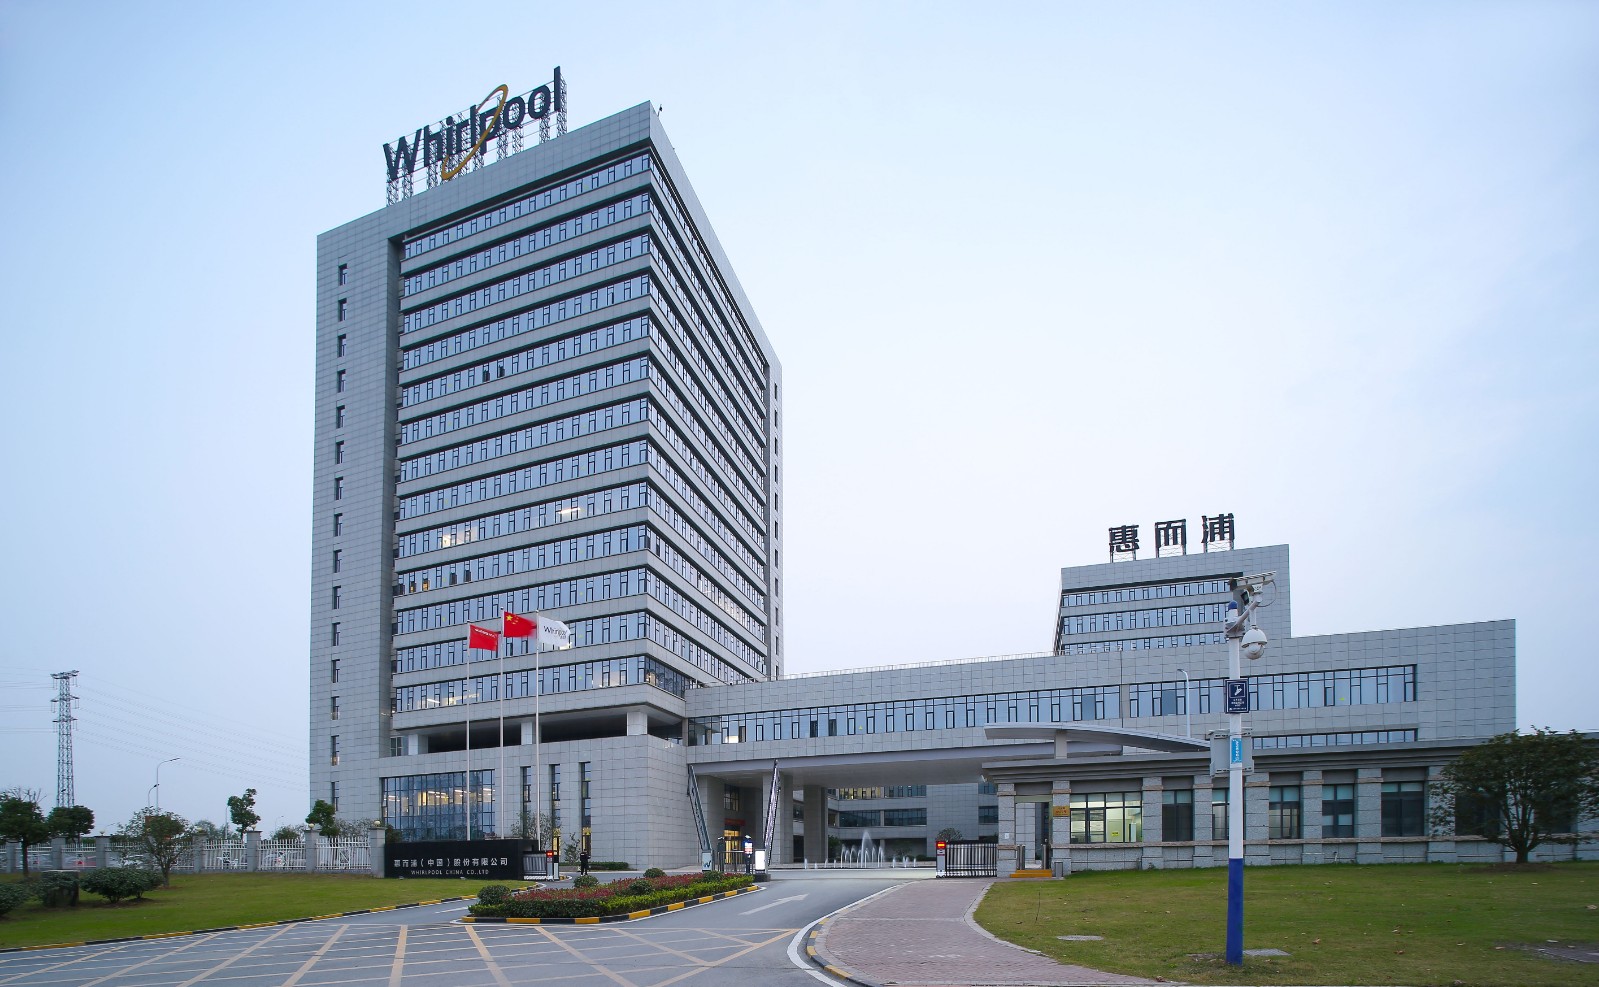 Whirlpool (China) Co., Ltd